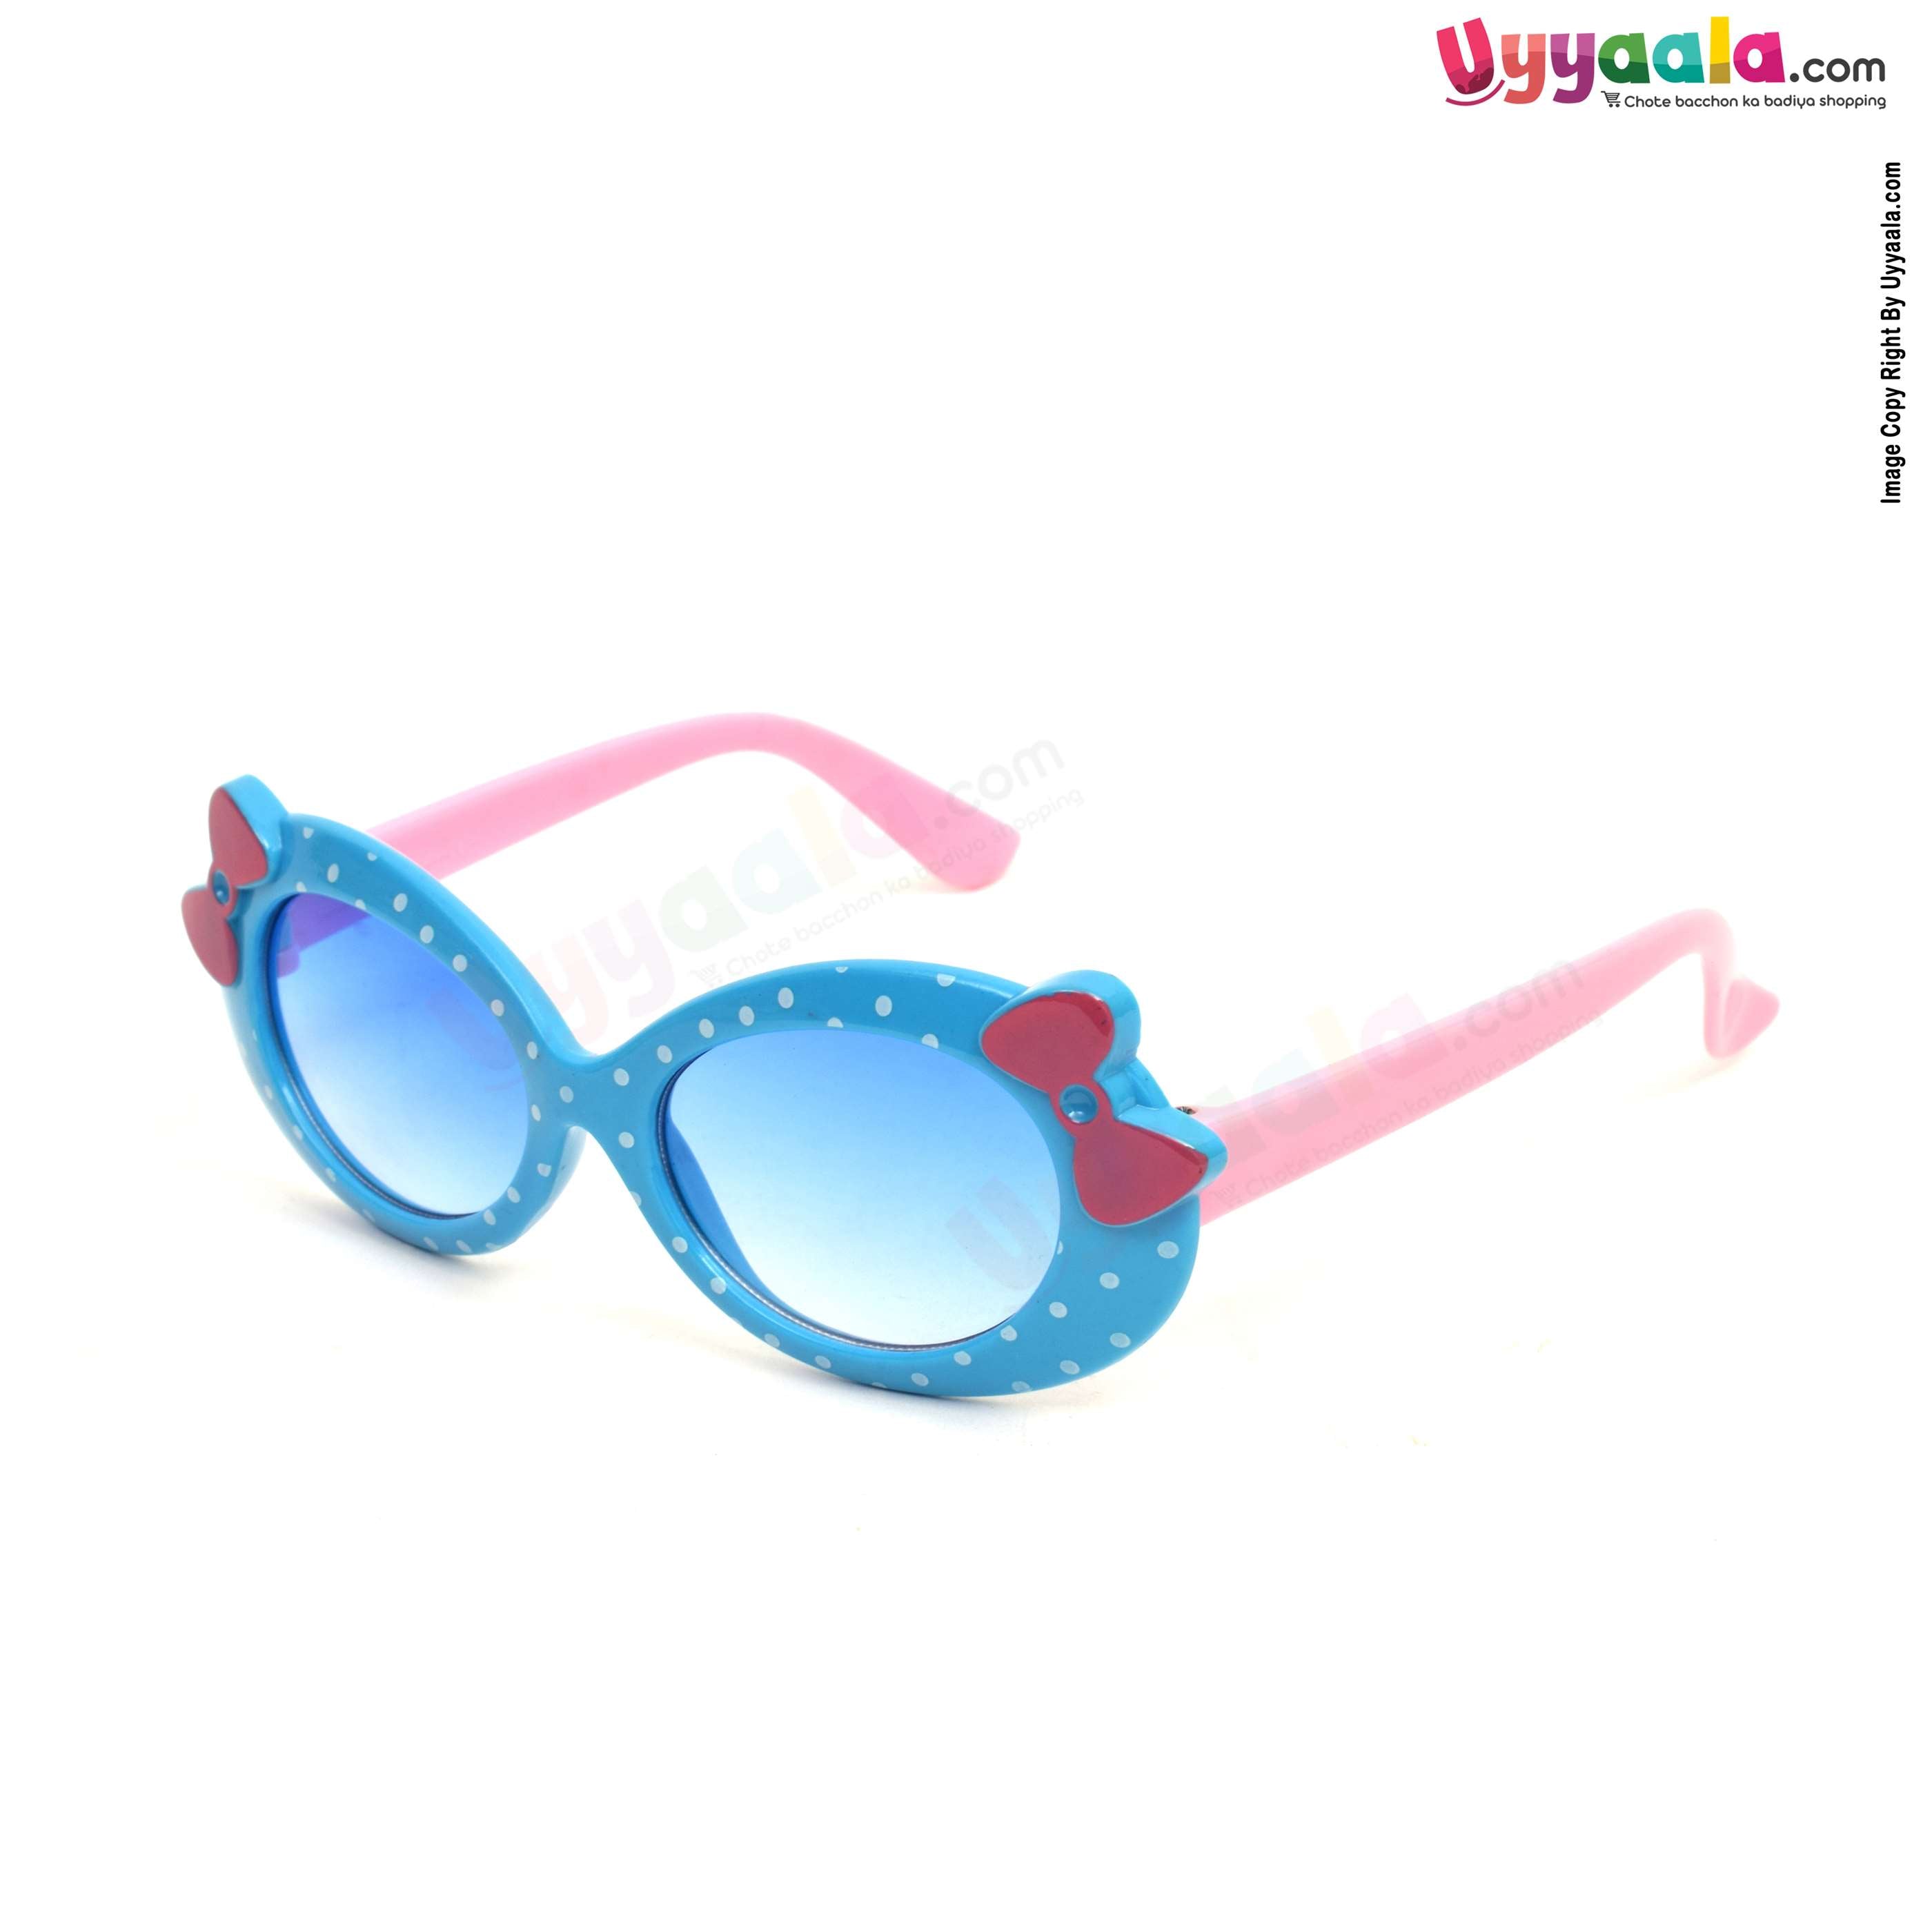 Stylish cat eye shaped tinted sunglasses for kids - sky blue & pink